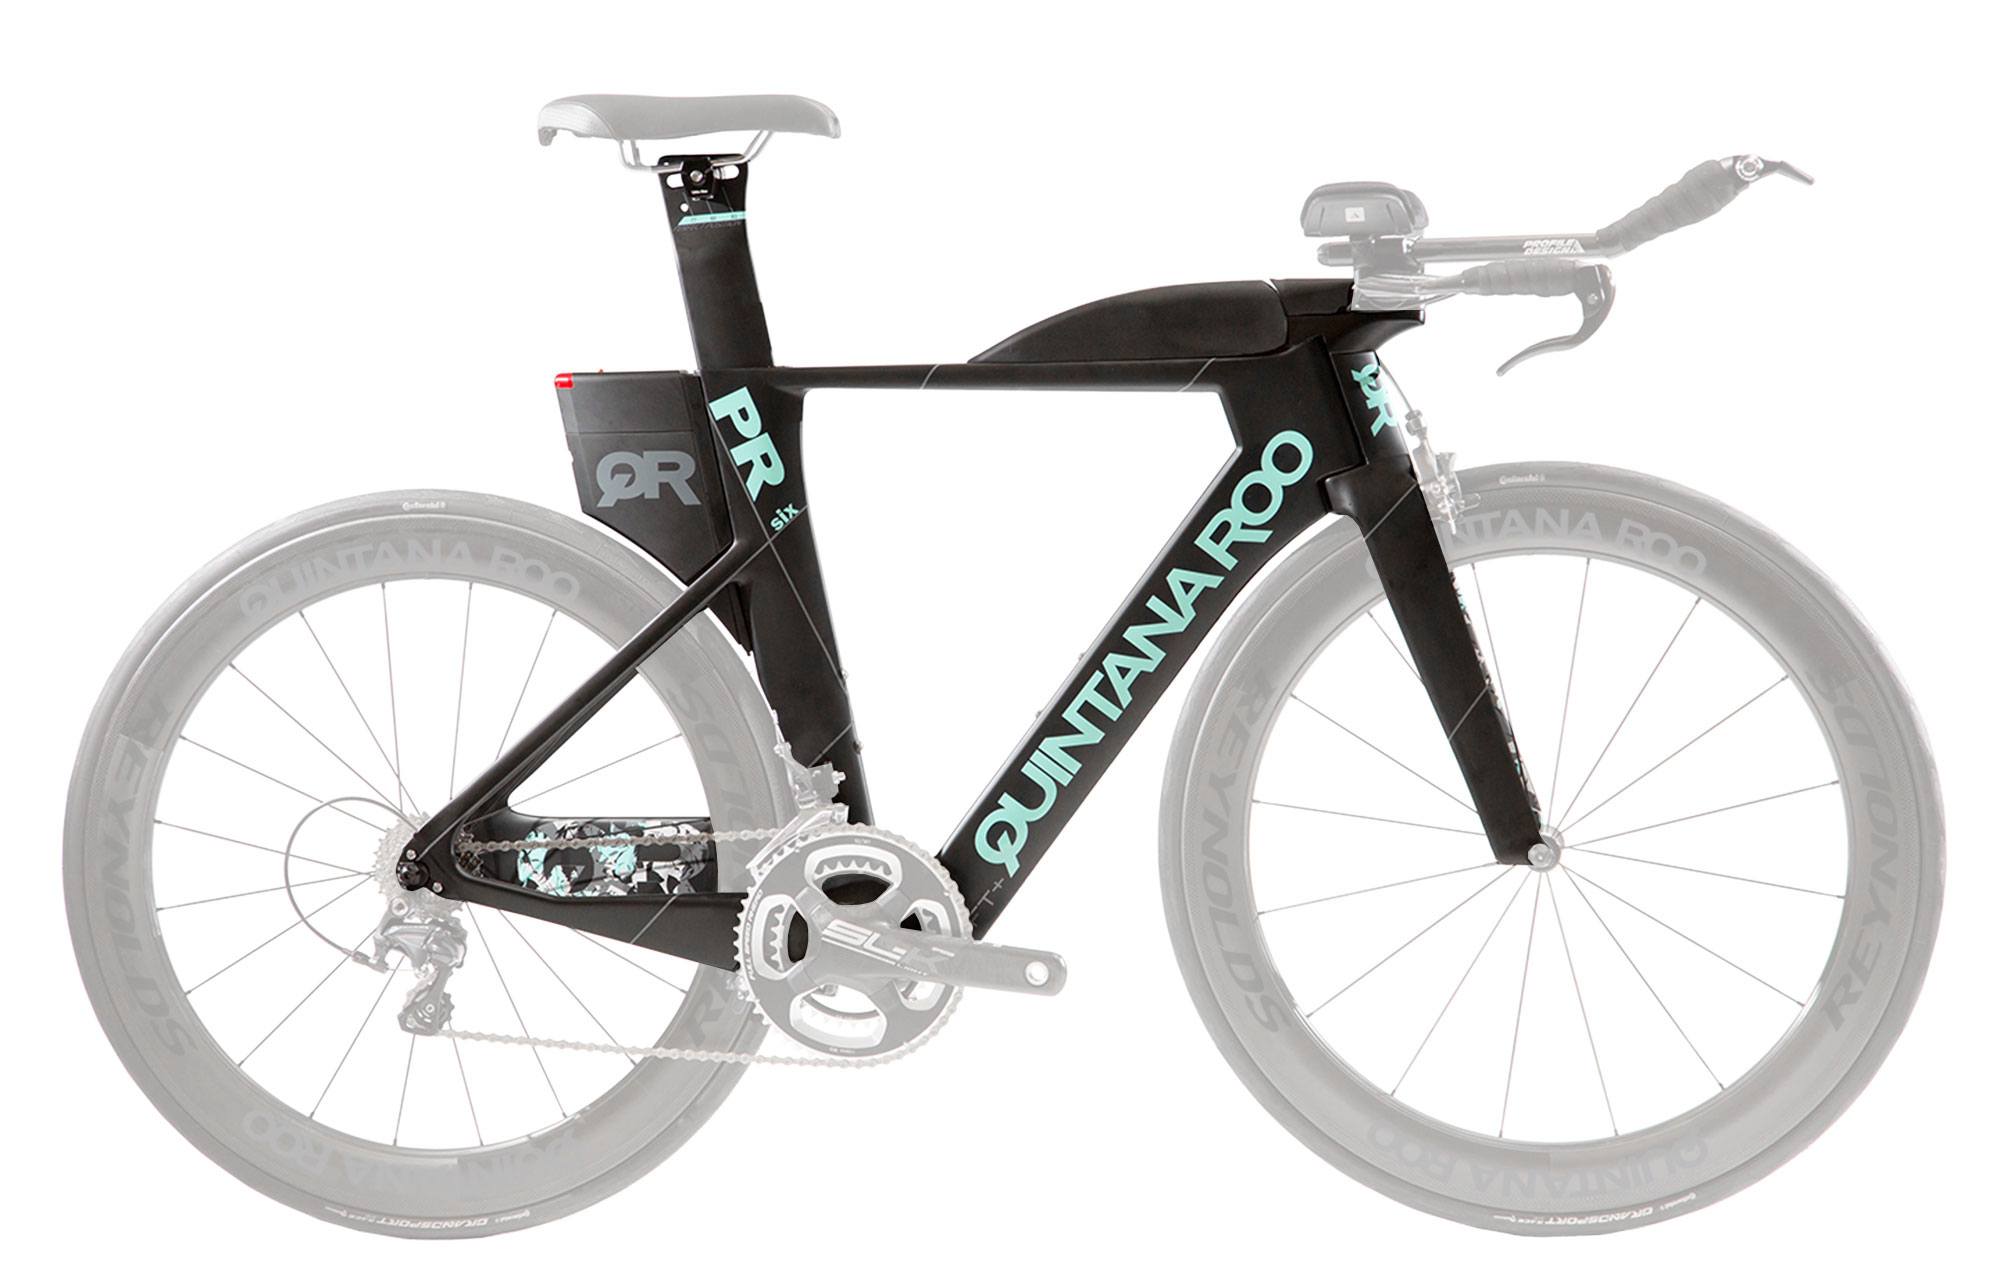 Quintana Roo PRsix Frameset | bike frame